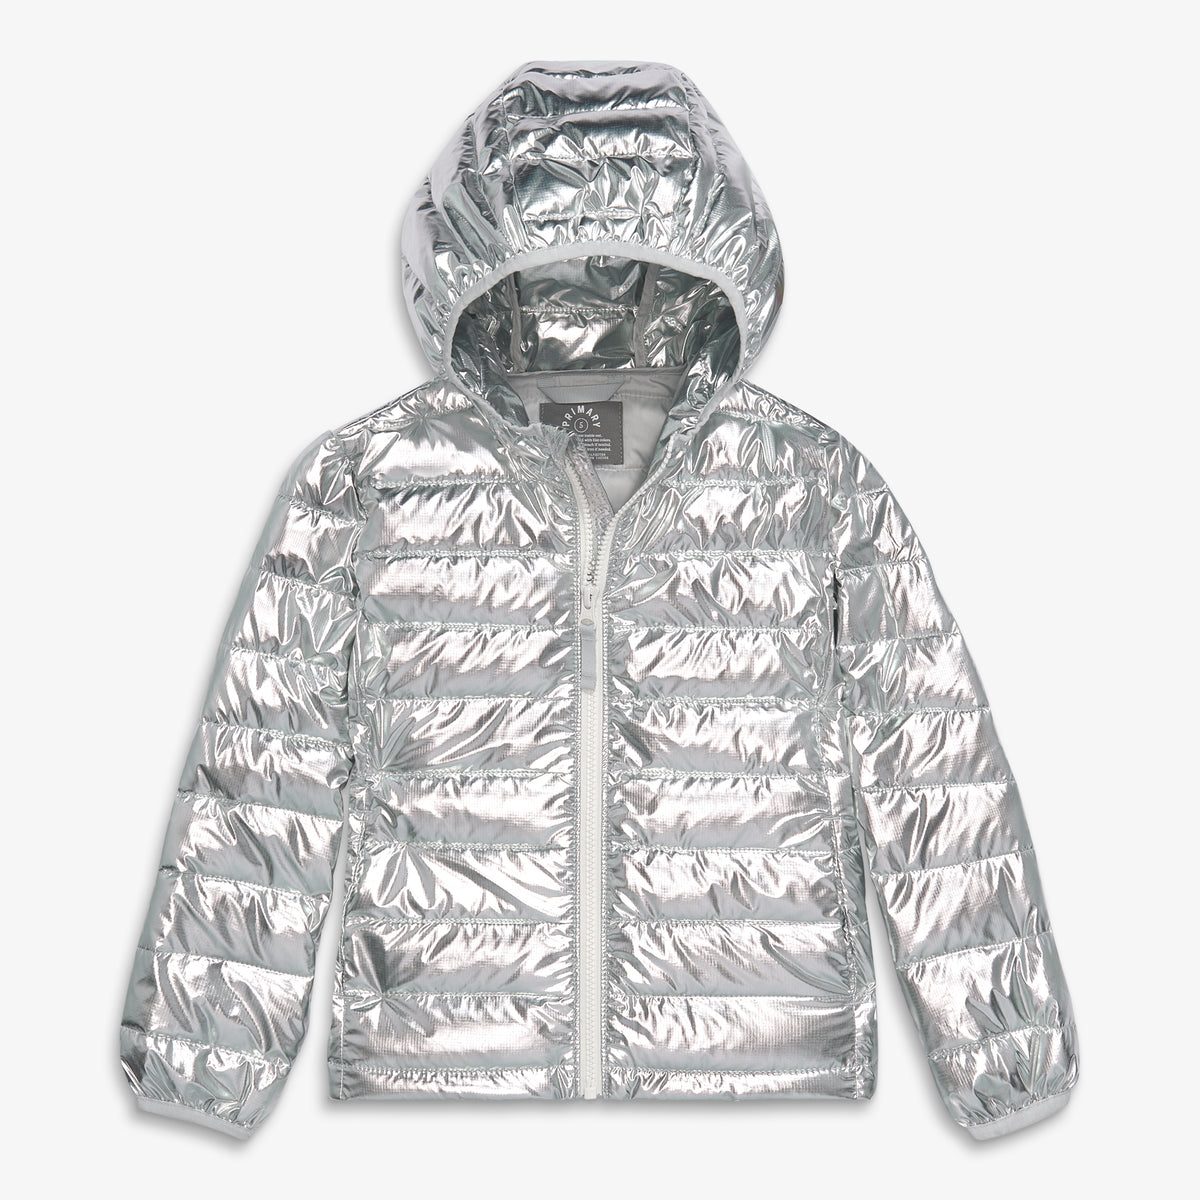 Kids lightweight puffer jacket in silver